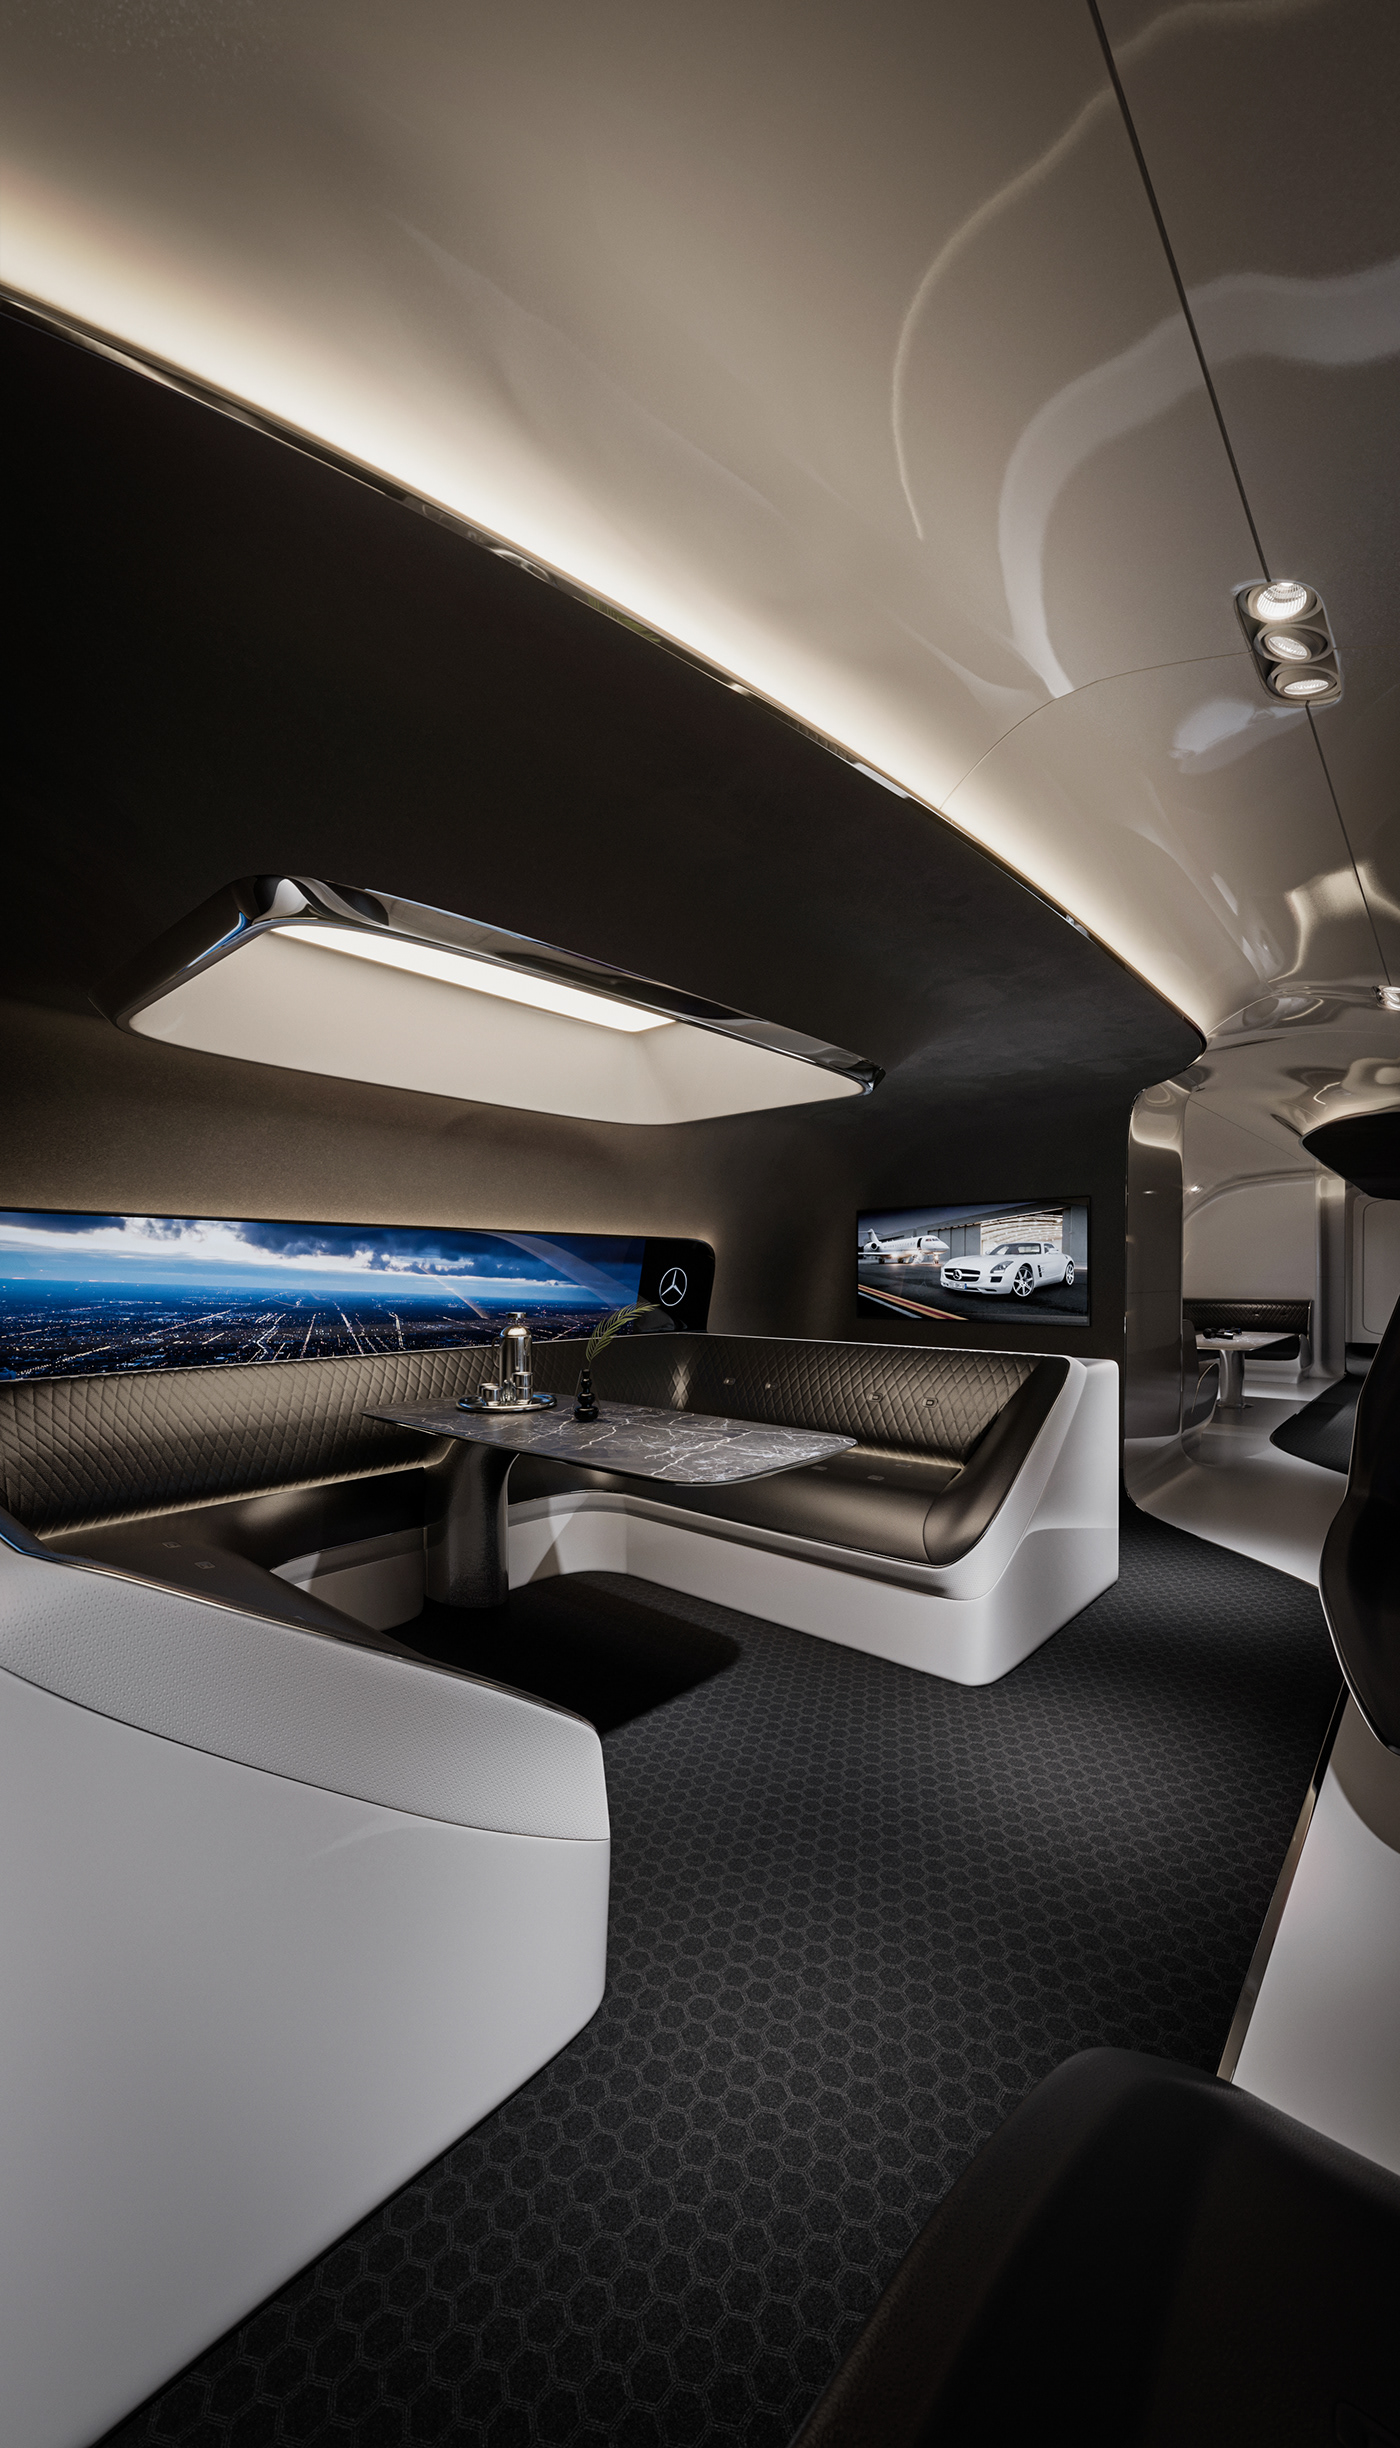 #3dsmax #airplanes #cgi #Corona #coronarender #coronarenderer #interior #Mercedes-Benz #jet